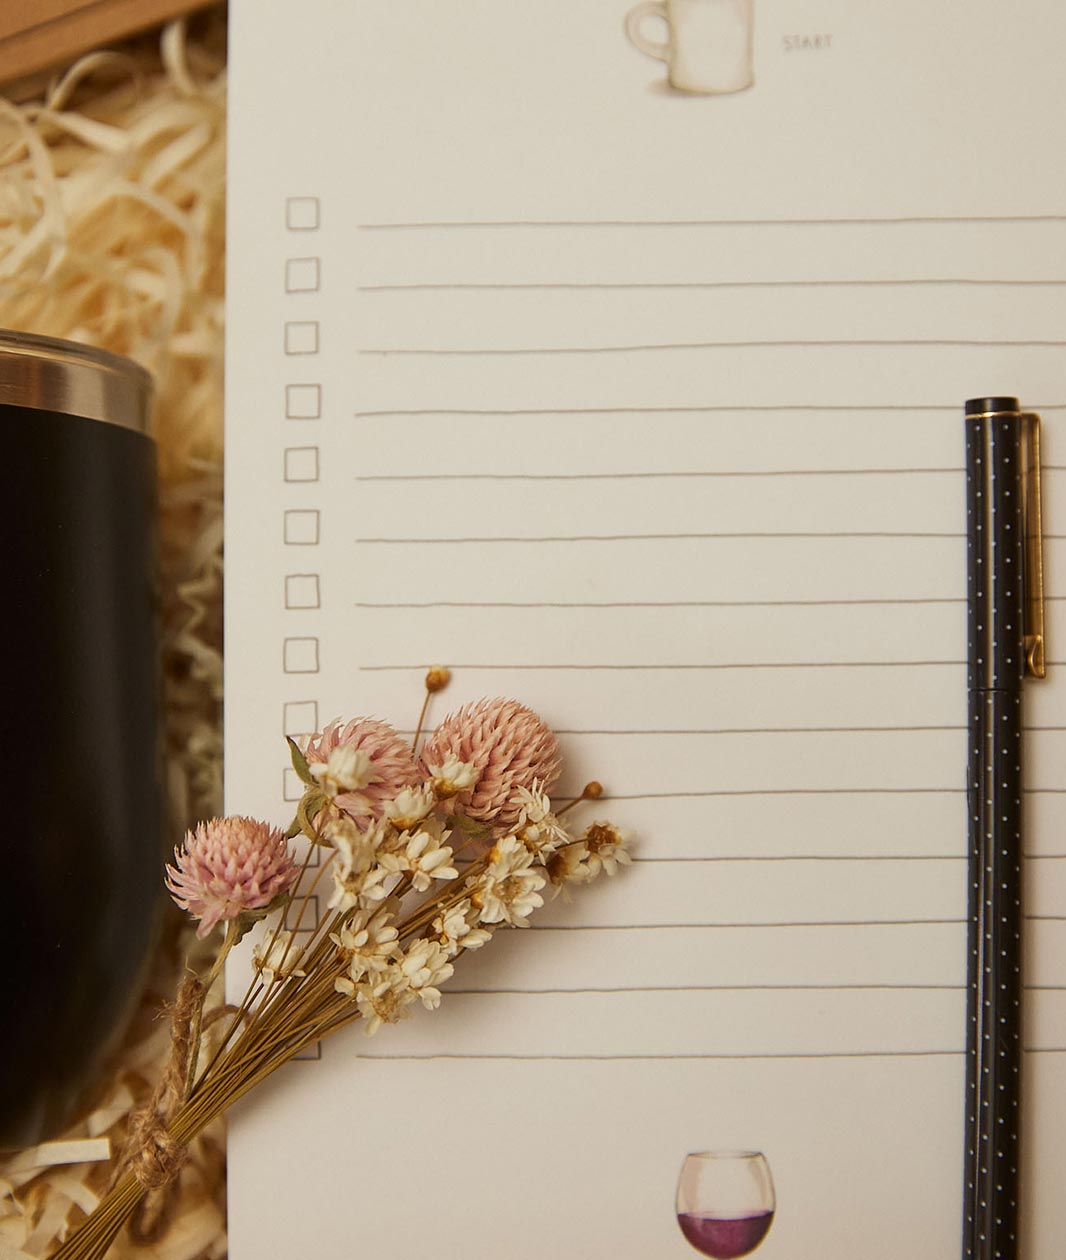 Coffee+Wine Checklist Notepad